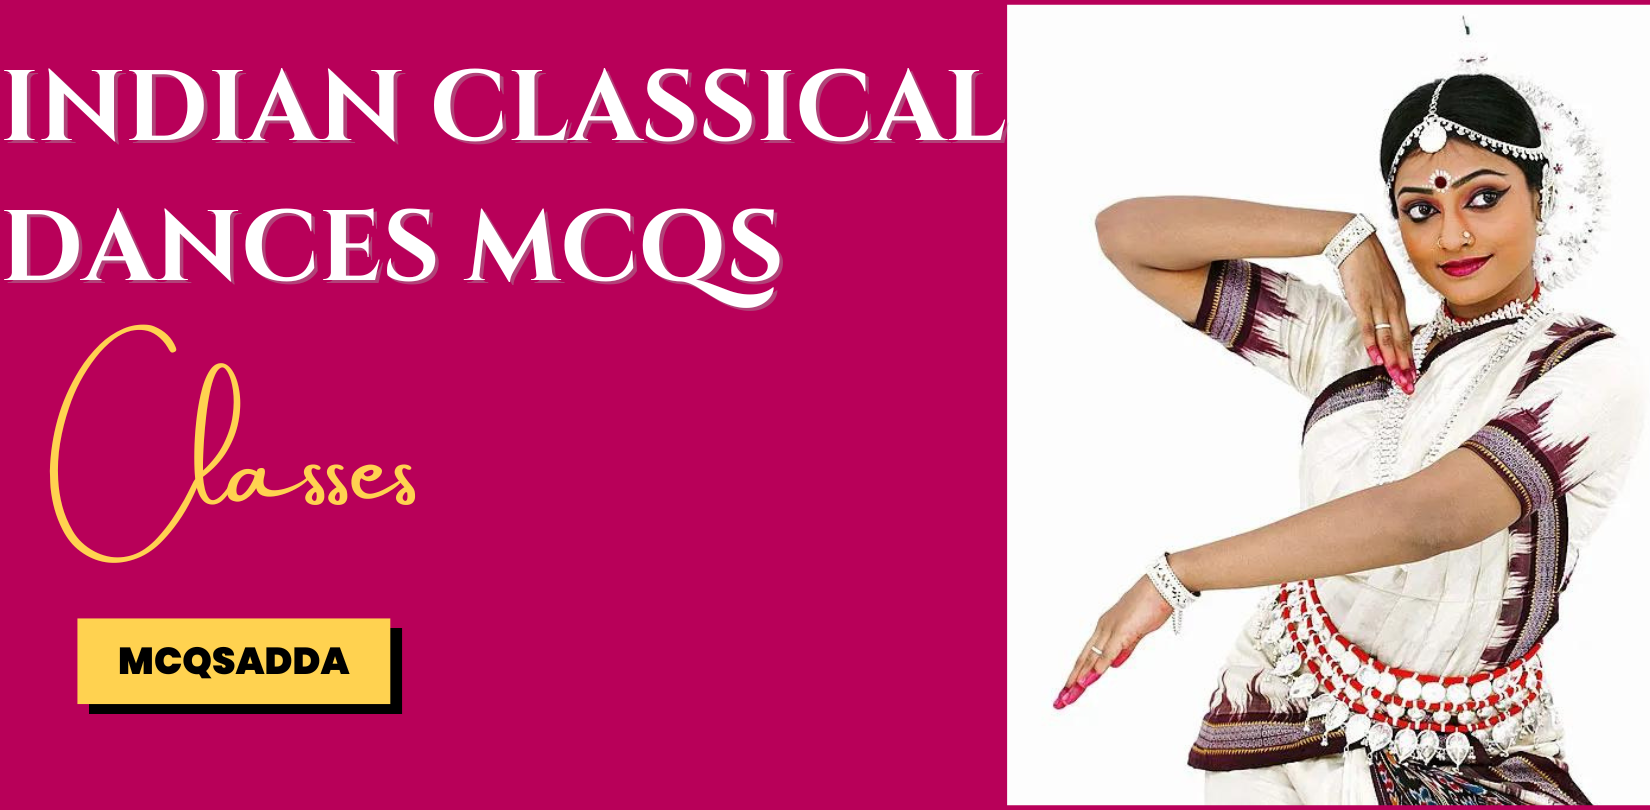 Indian Classical Dances MCQs